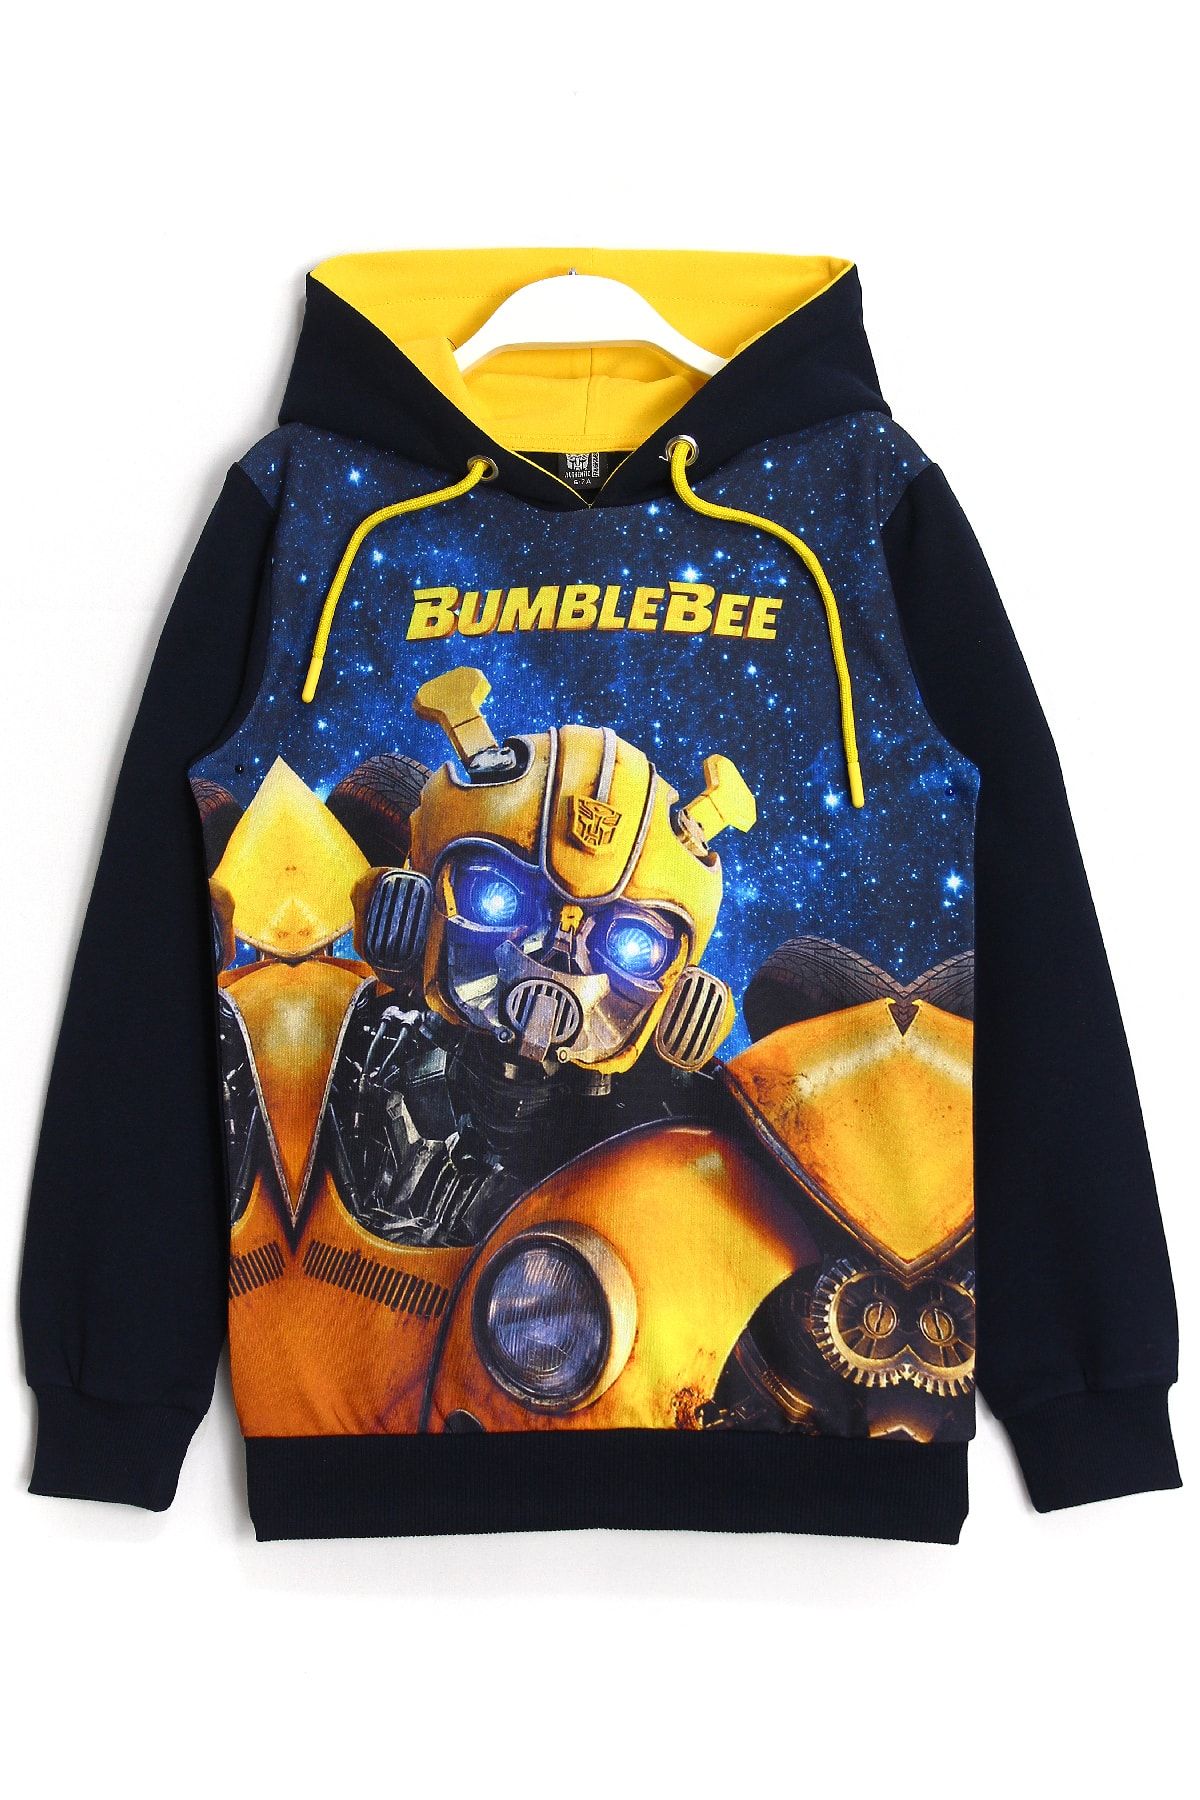 transformers Bumblebee 3d Baskılı Erkek Çocuk Sweatshirt